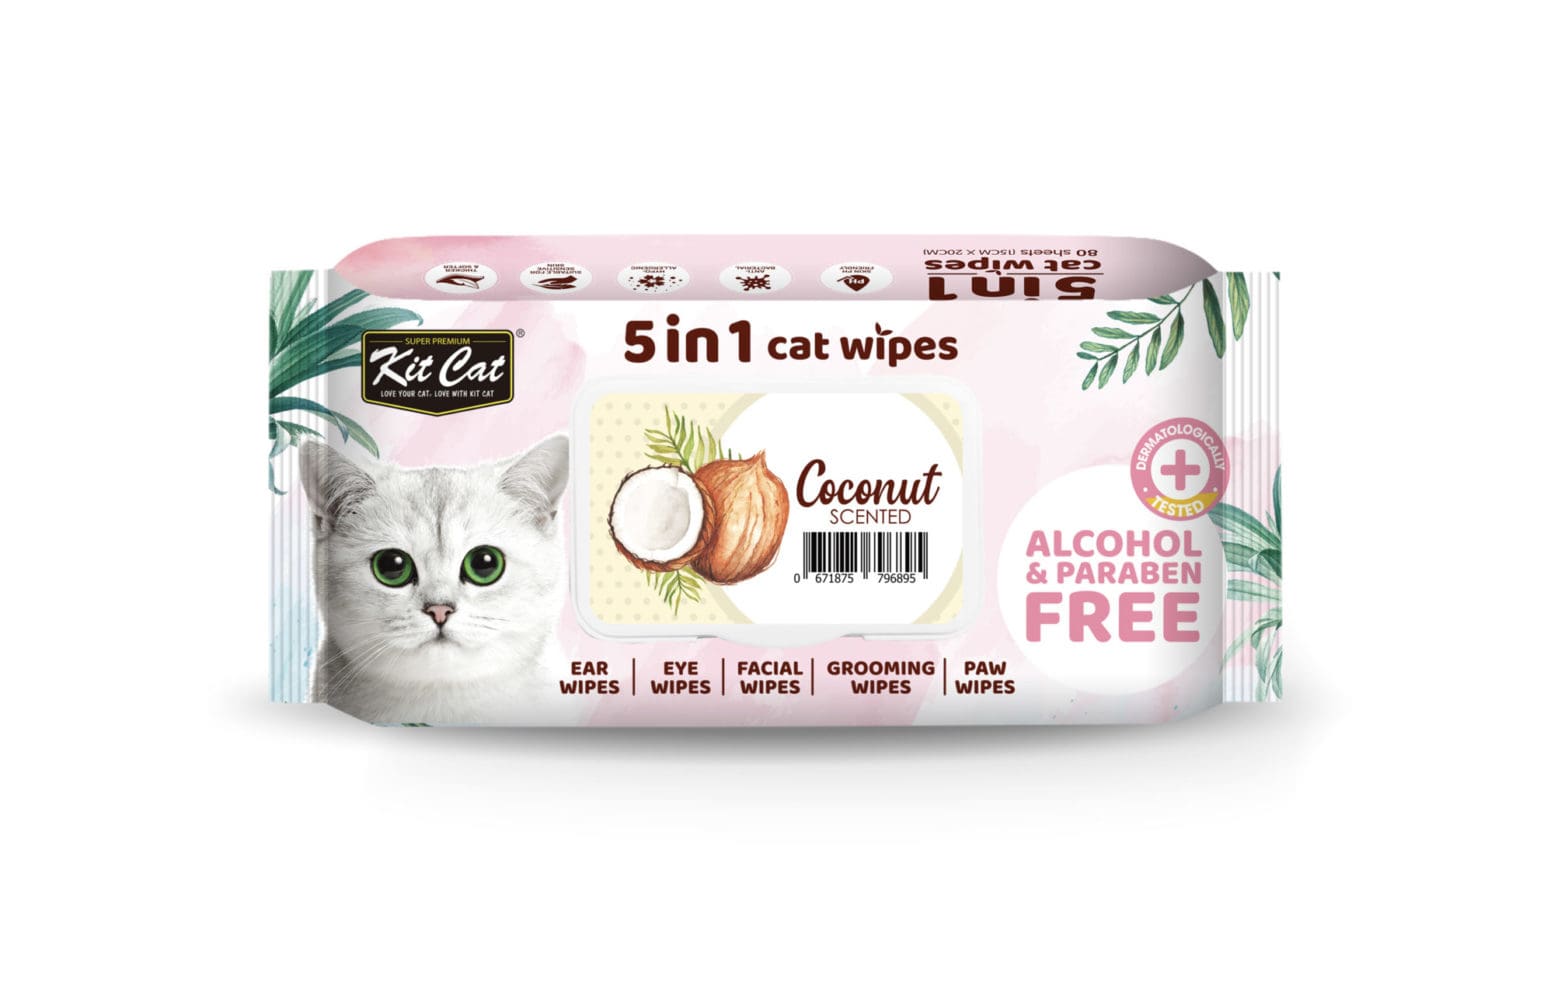 Kit Cat 5 in 1 Cat Wipes 80pcs (Coconut)